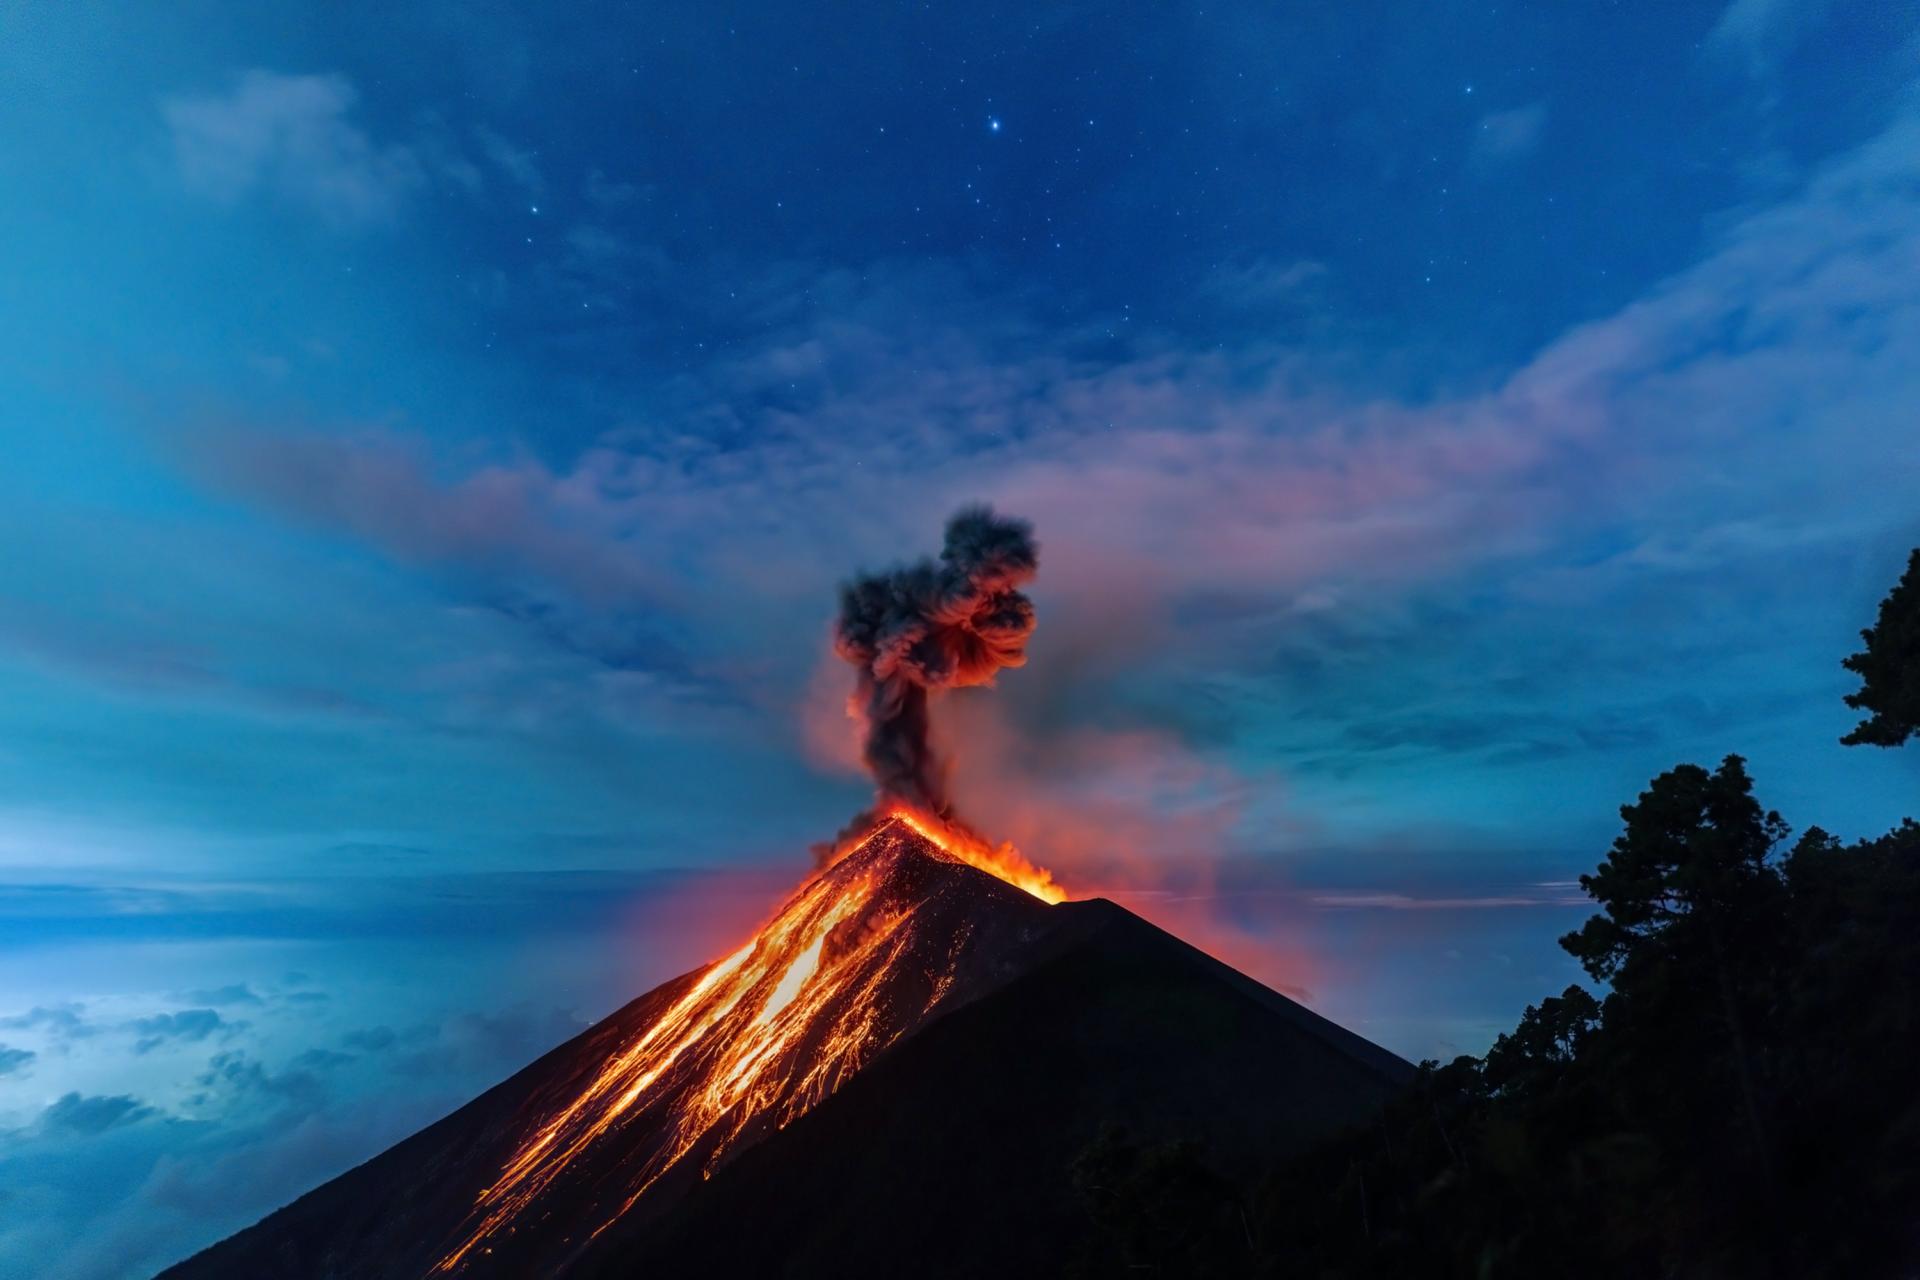 European Photography Awards Winner - Volcano Night